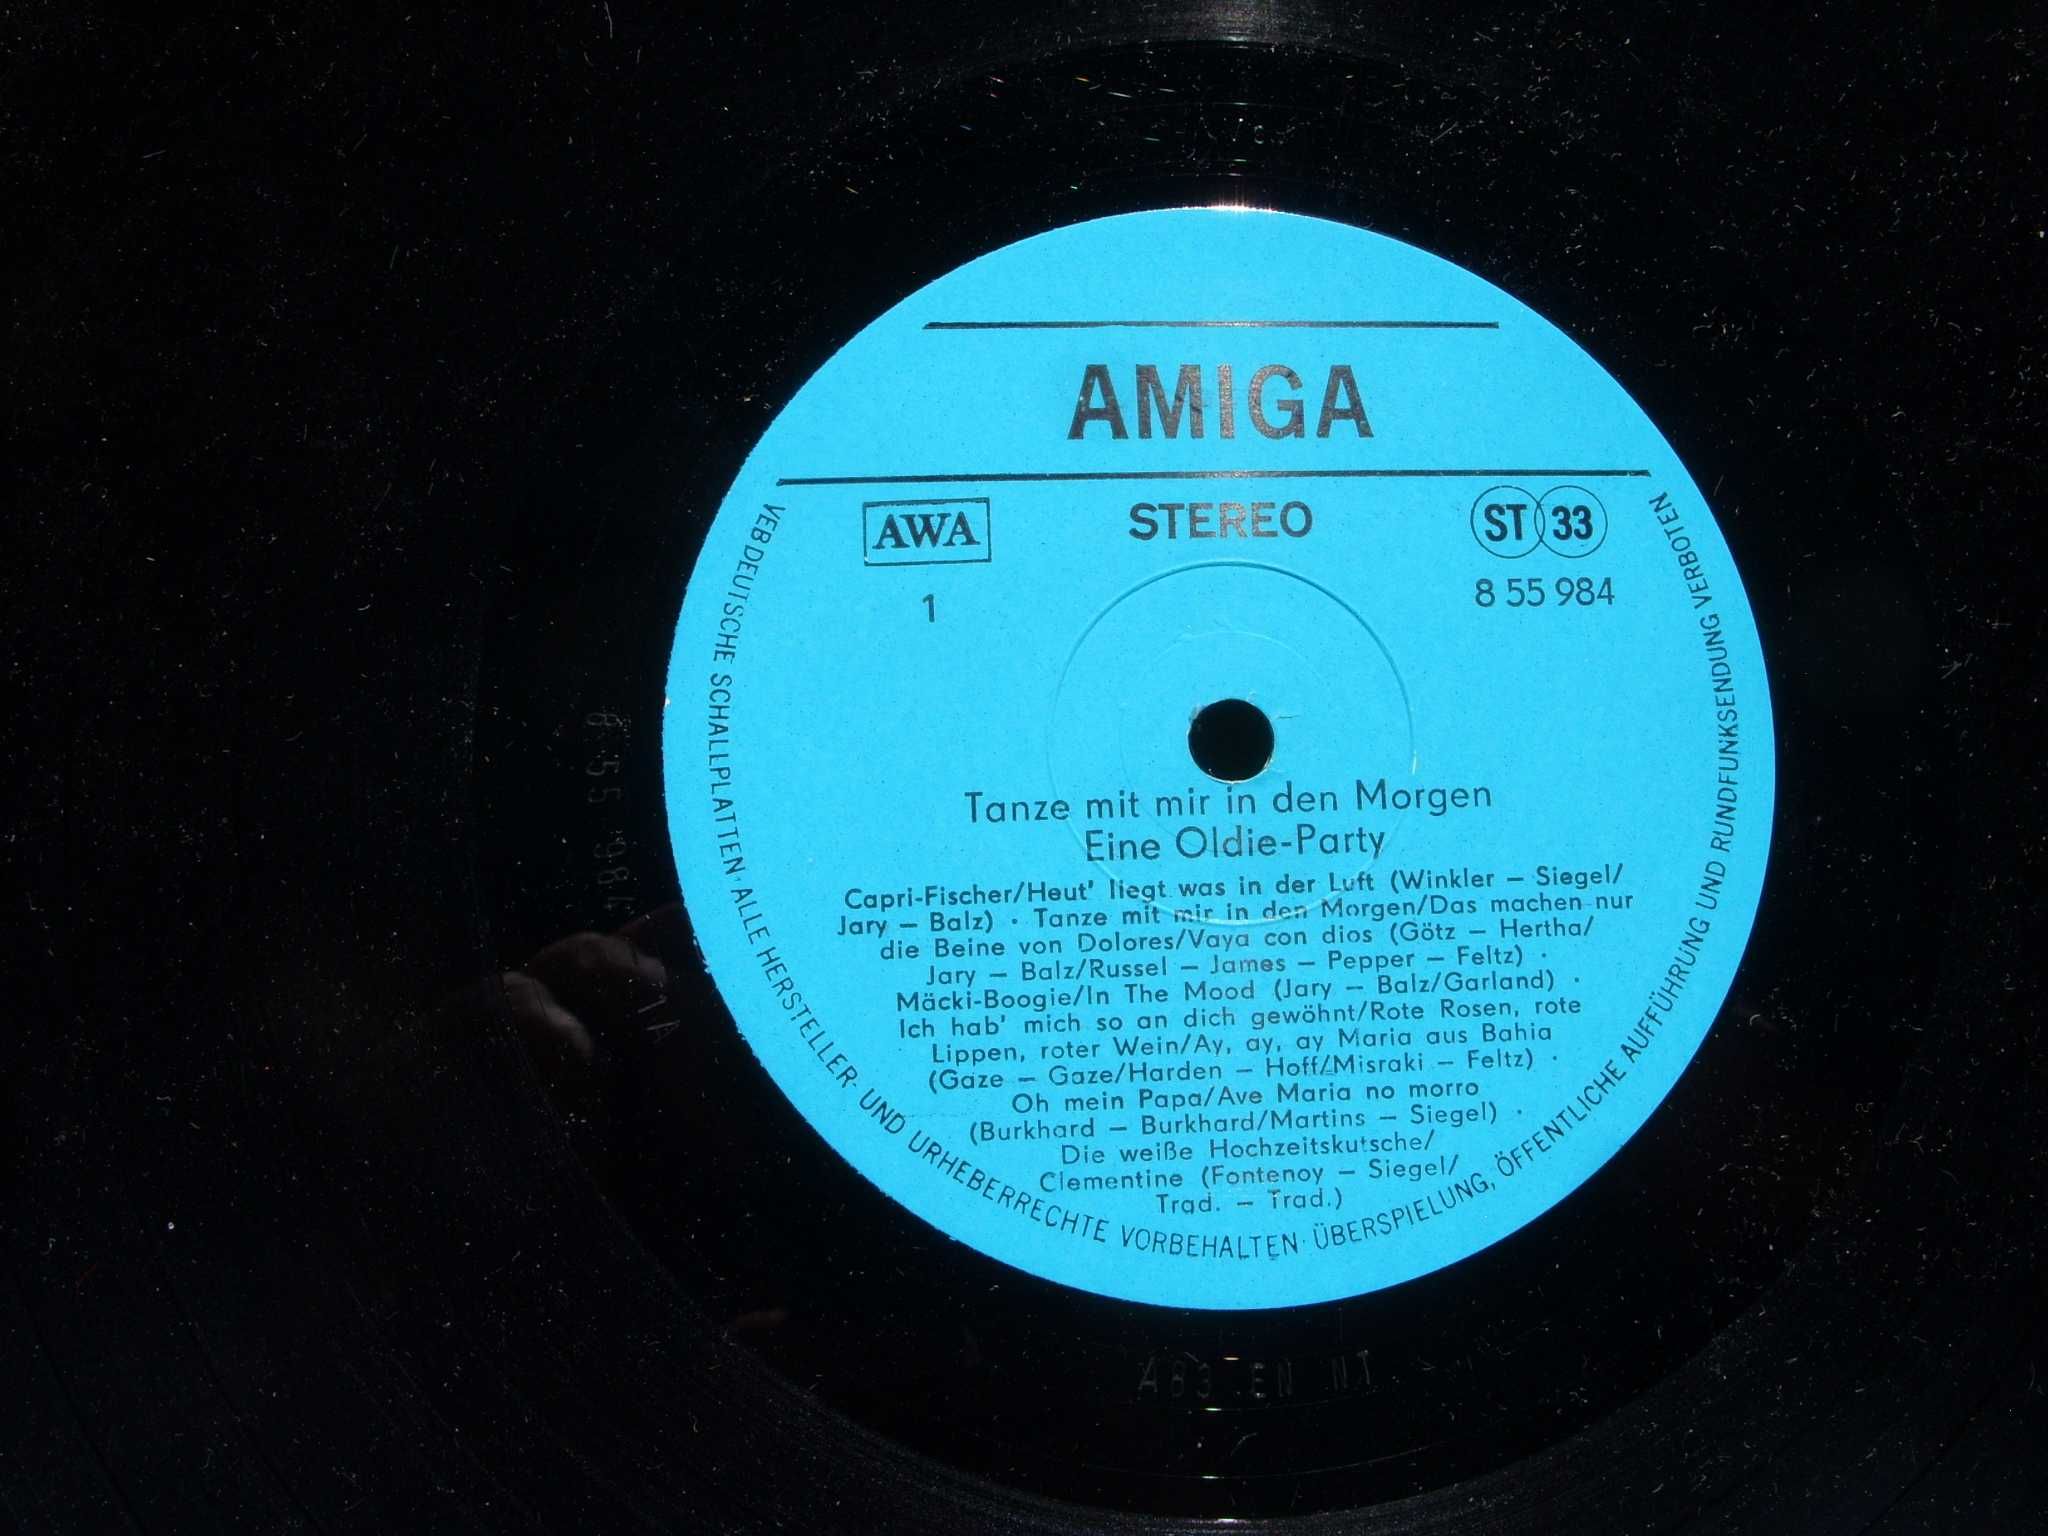 16.winyl LP.; Tanze mit mir in den morgen; Amiga 1983 rok.